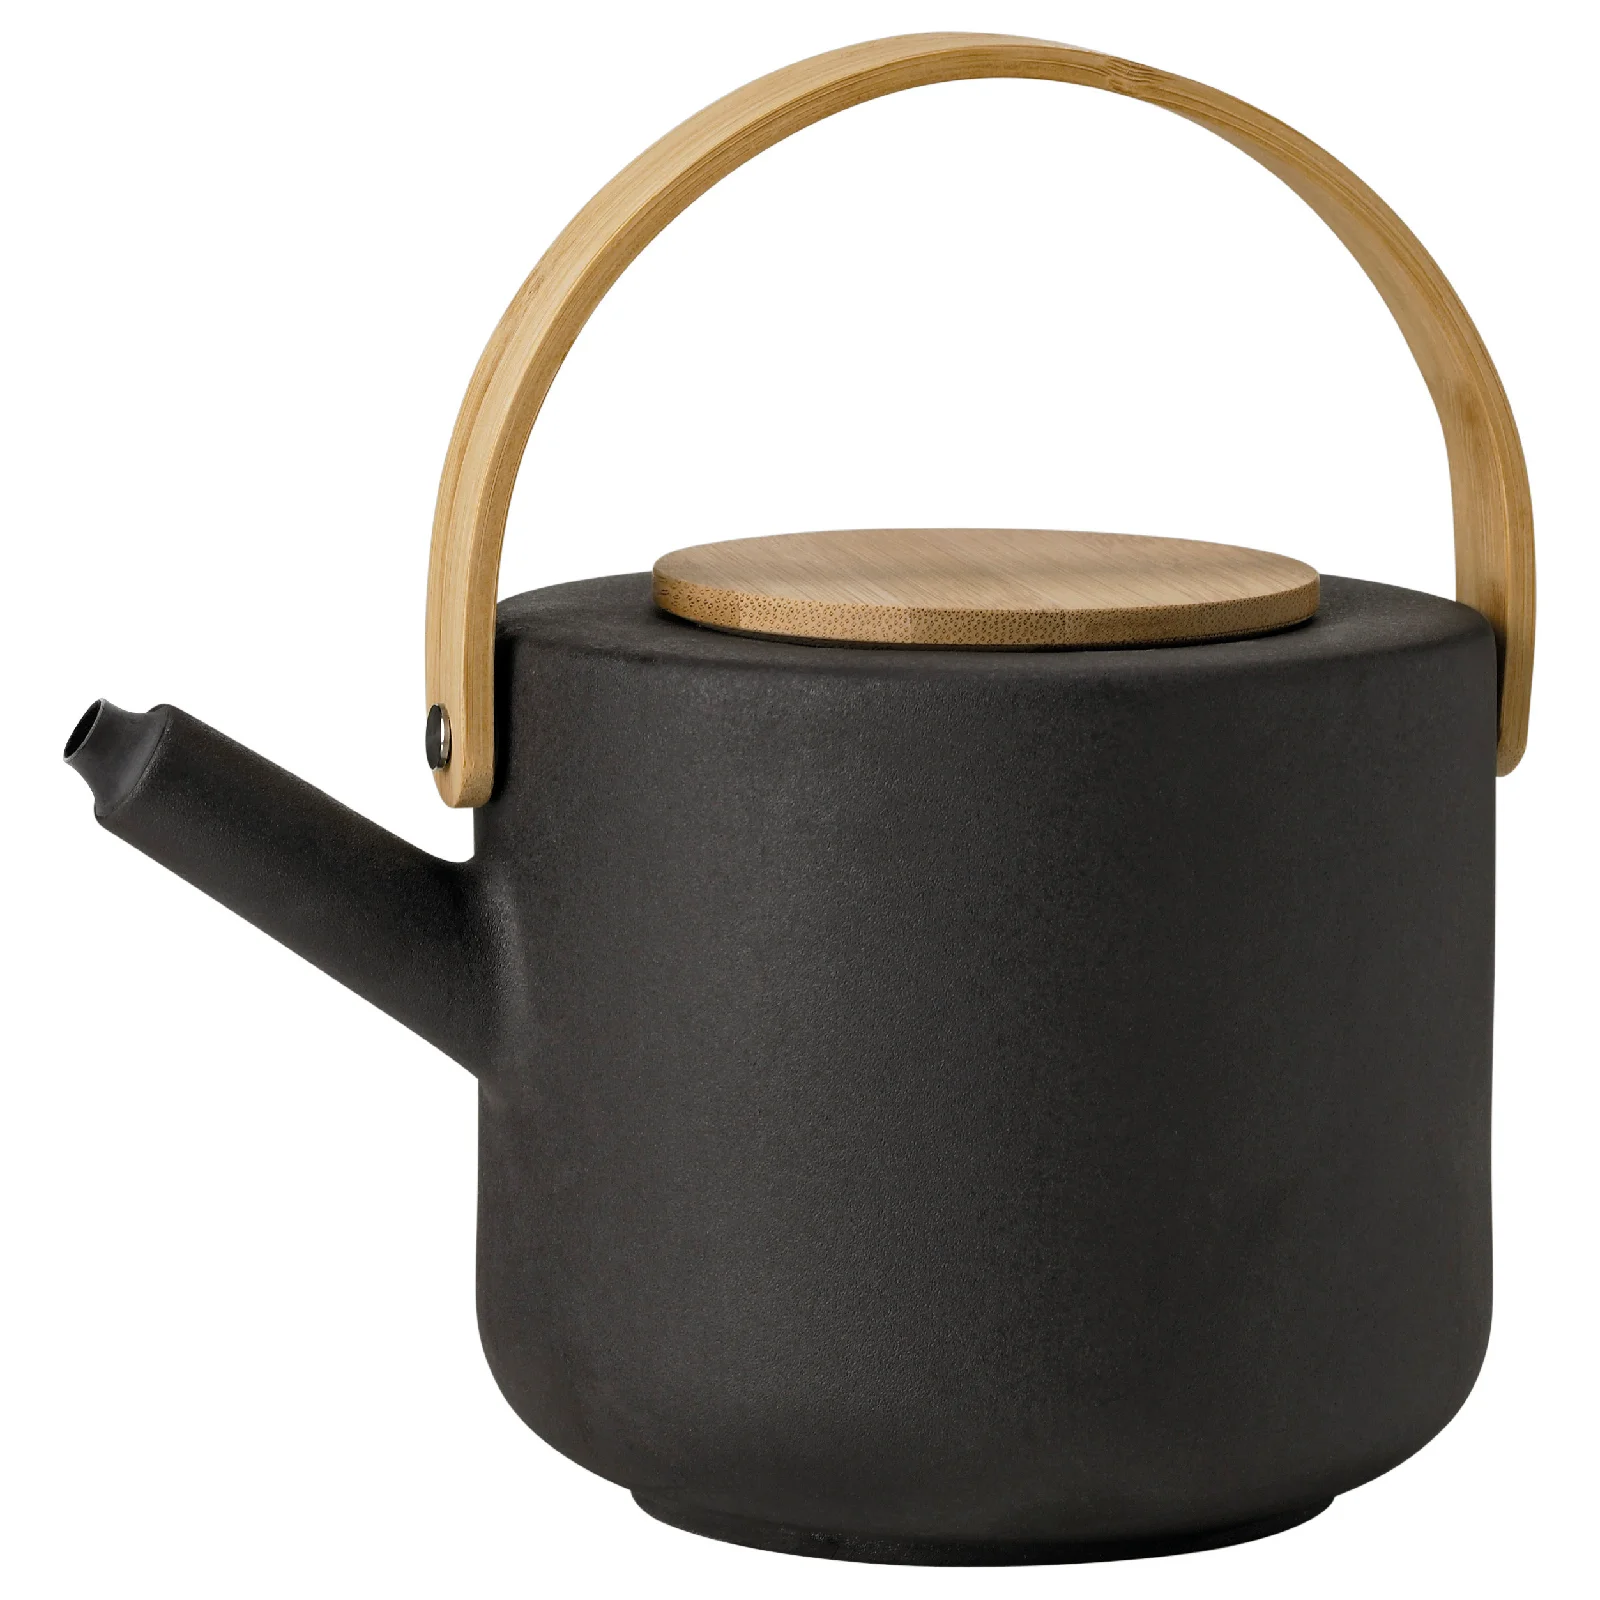 Stelton Theo Teapot - 1.25L - Black Image 1